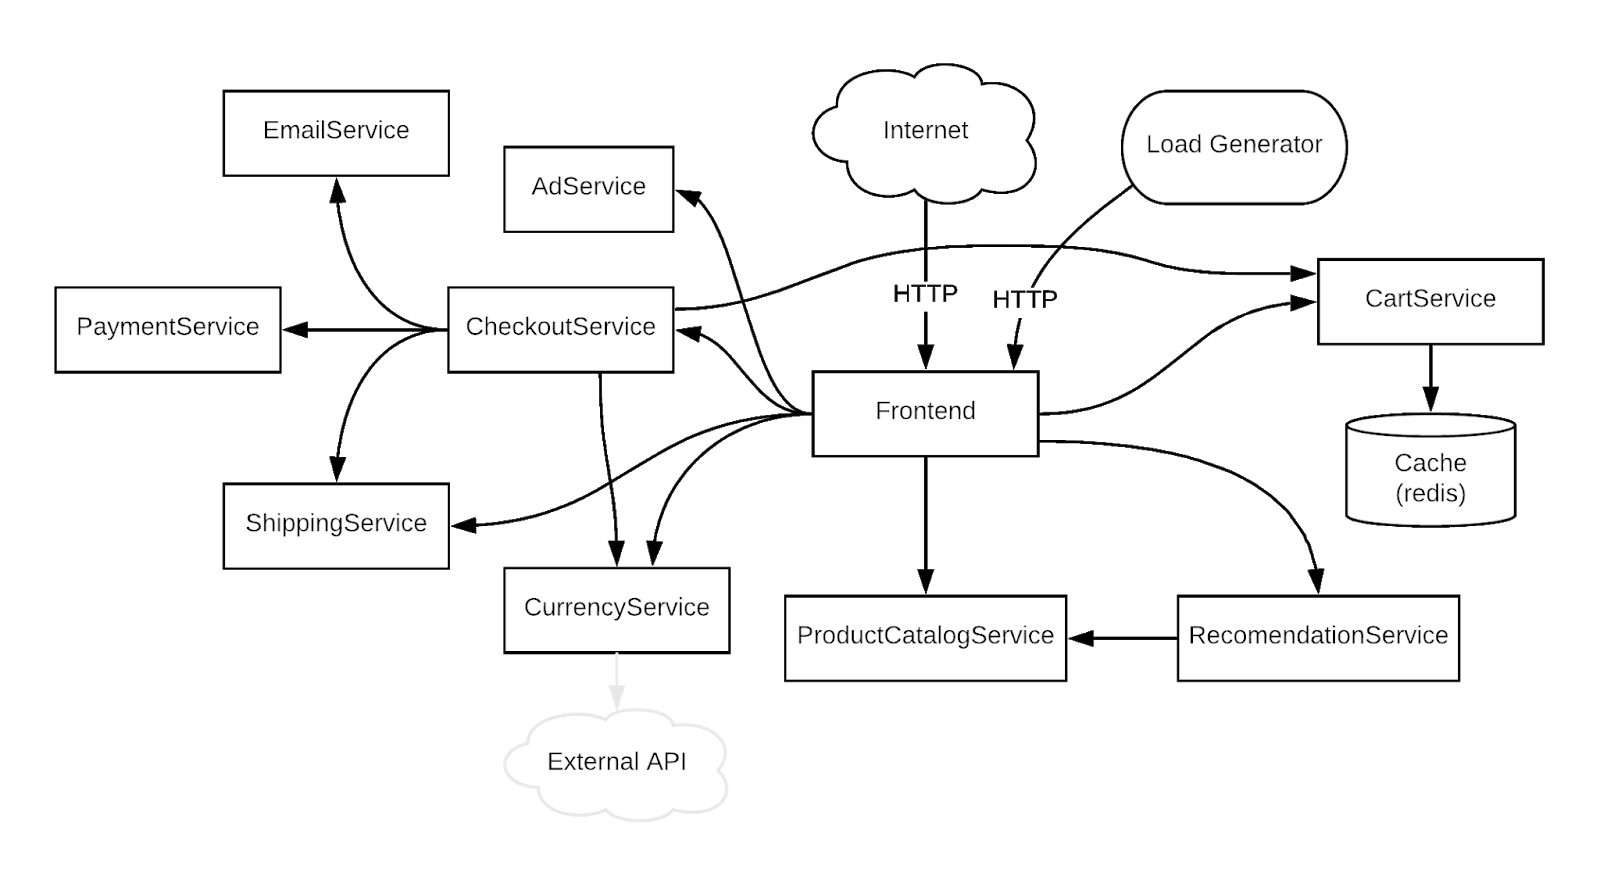 The application architecture diagram